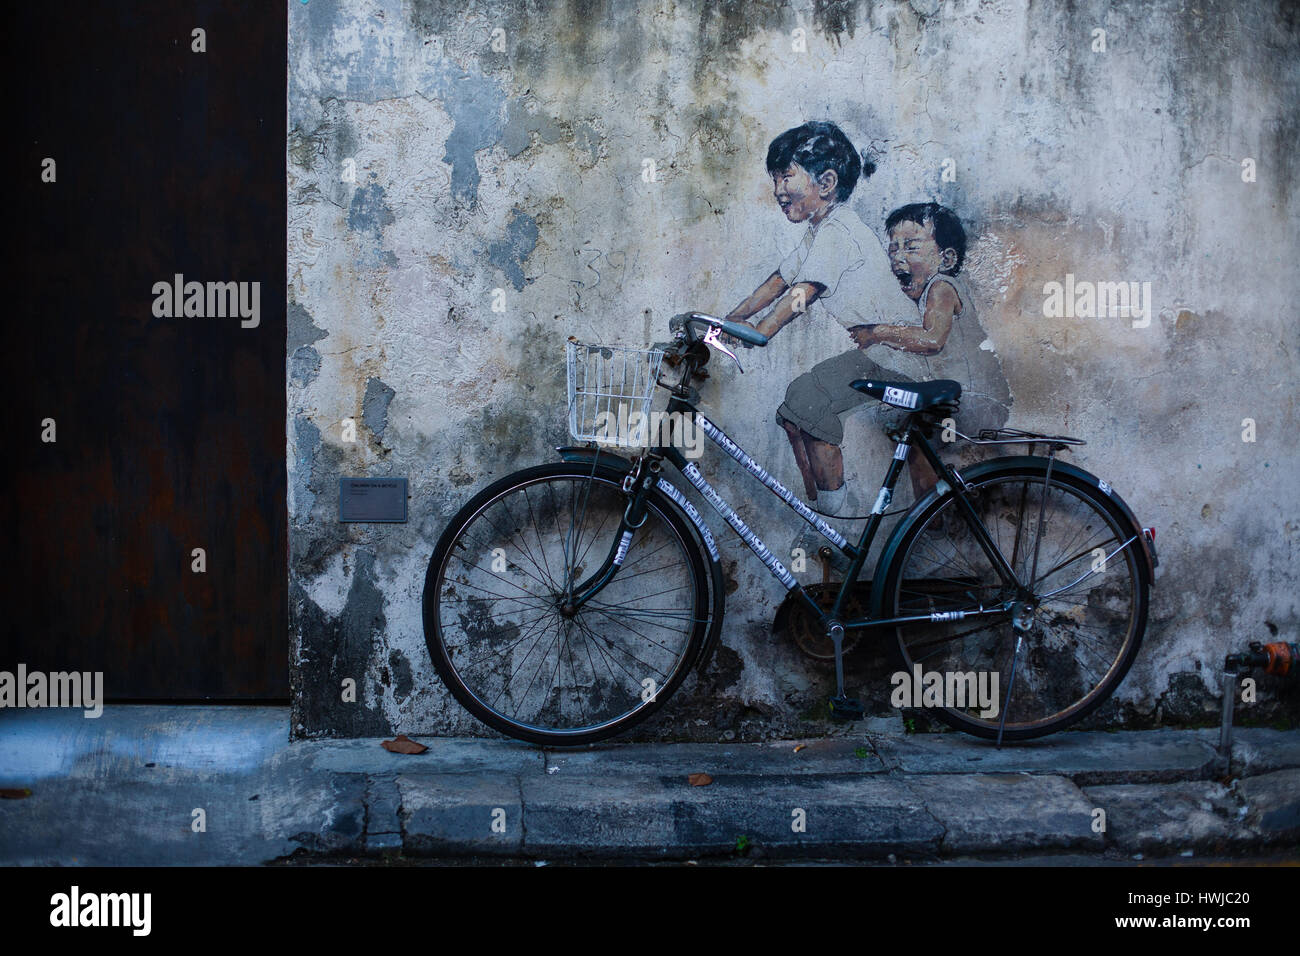 Graffiti with happy children, bike on the wall Stock Photo